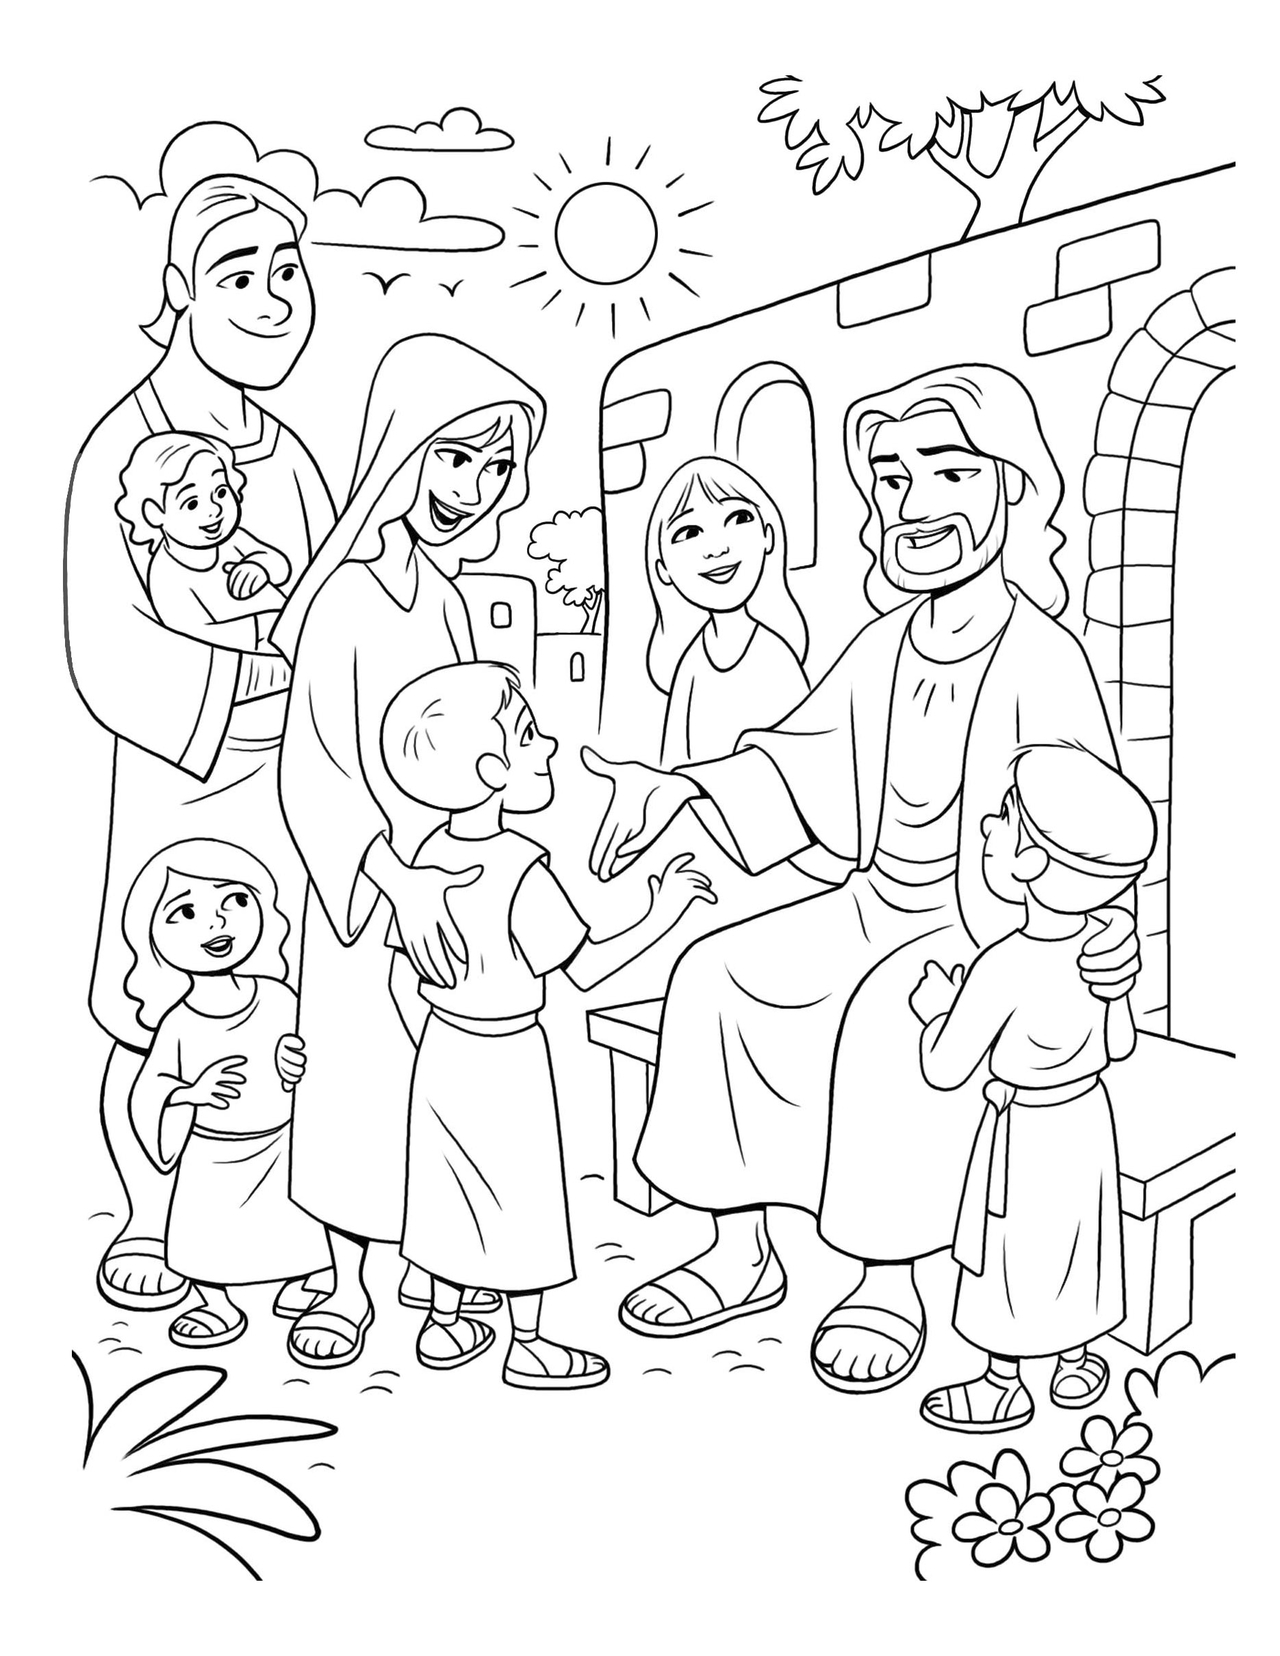 Christ Meeting the Children